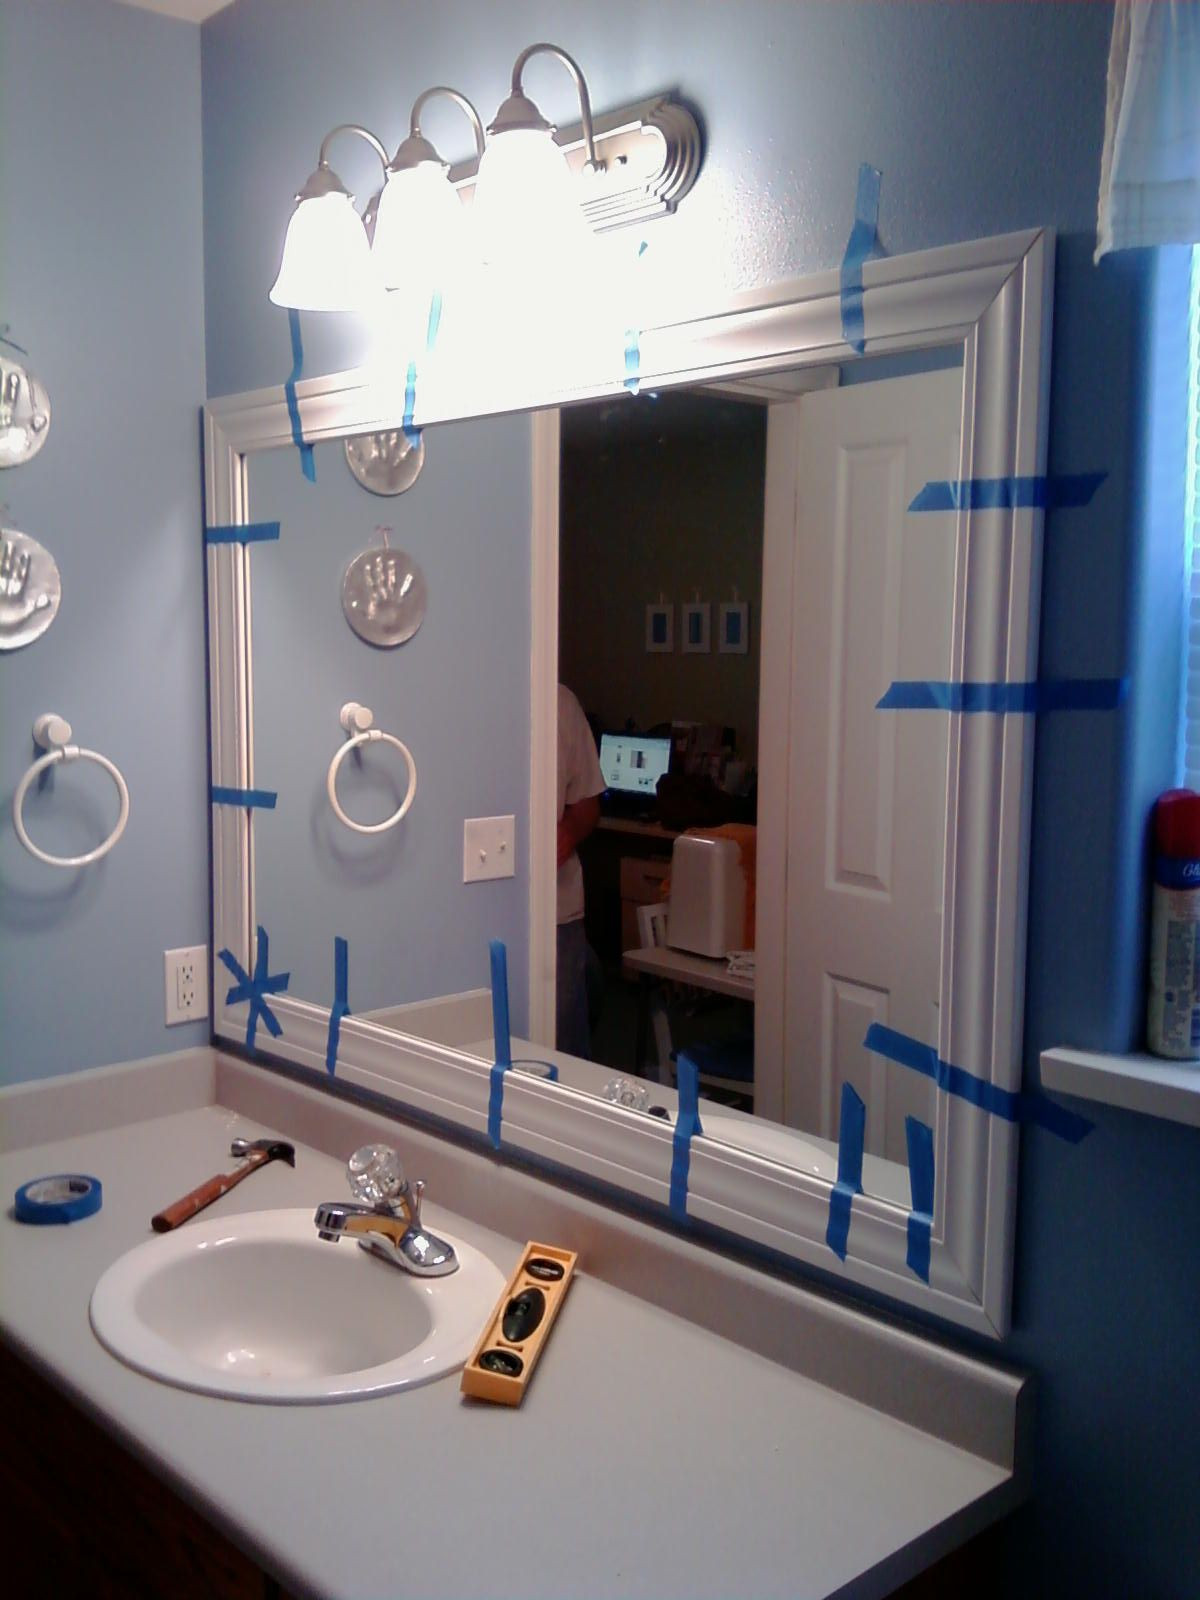 Framed Bathroom Mirror Ideas
 This Thrifty House Framed Bathroom Mirror howto